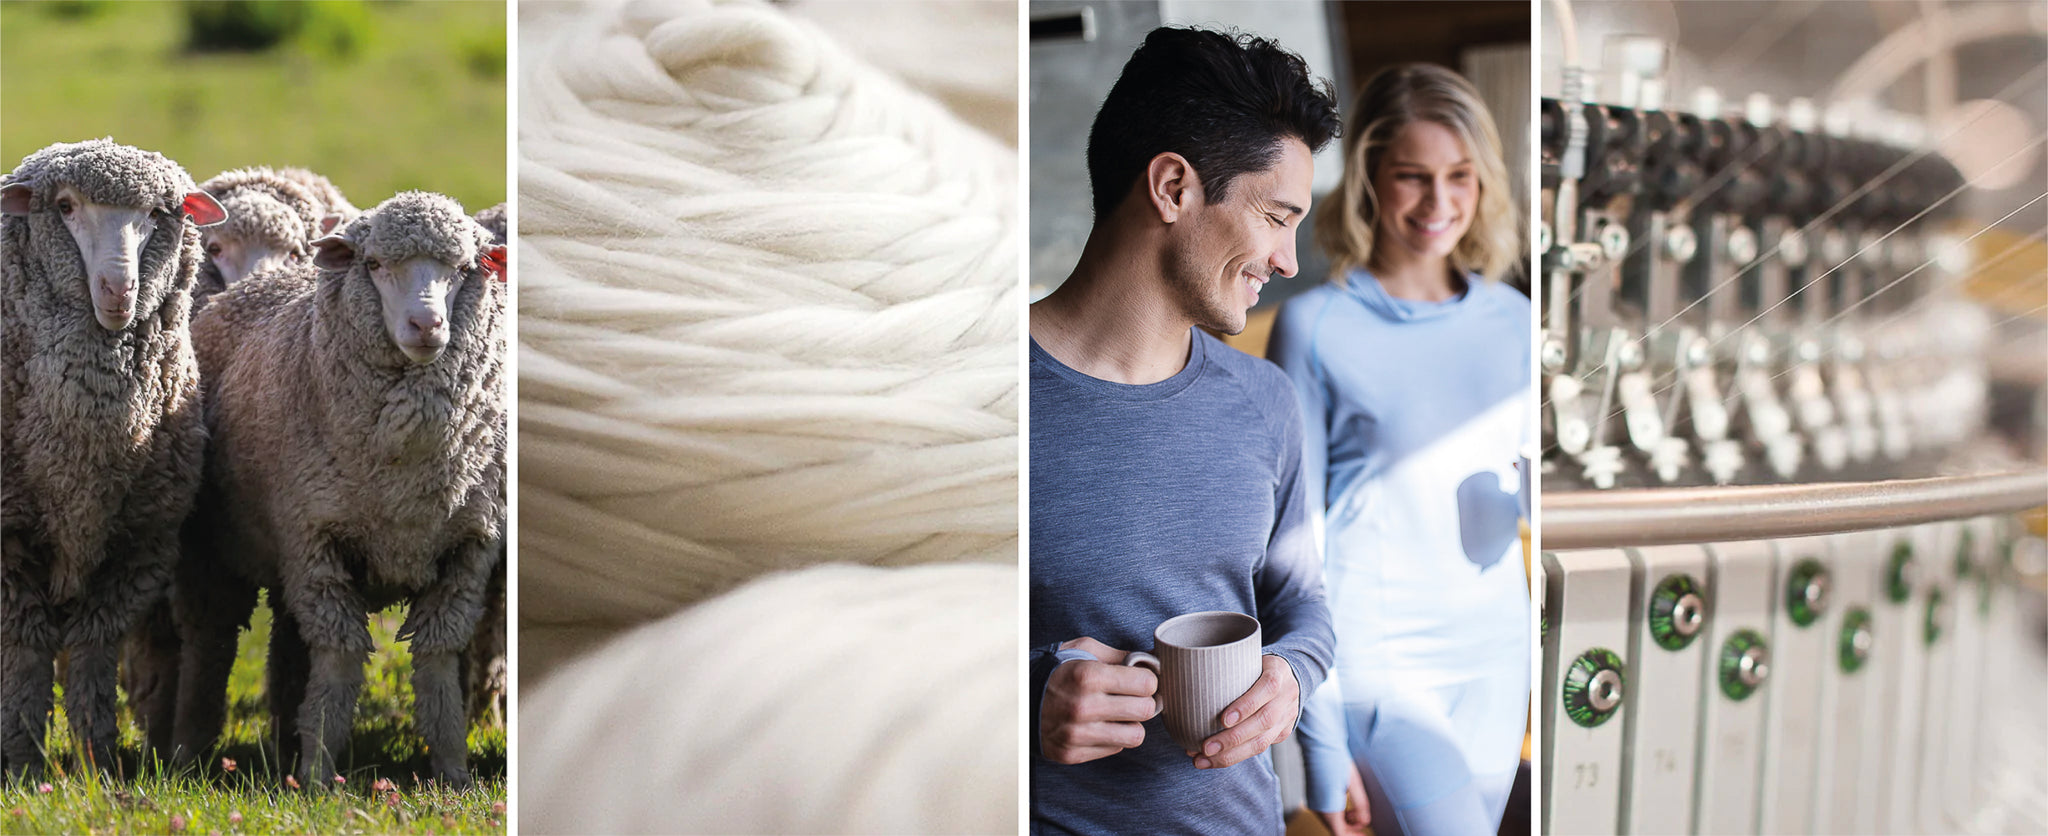 Stay warm sleepwear: from fibre to sleep